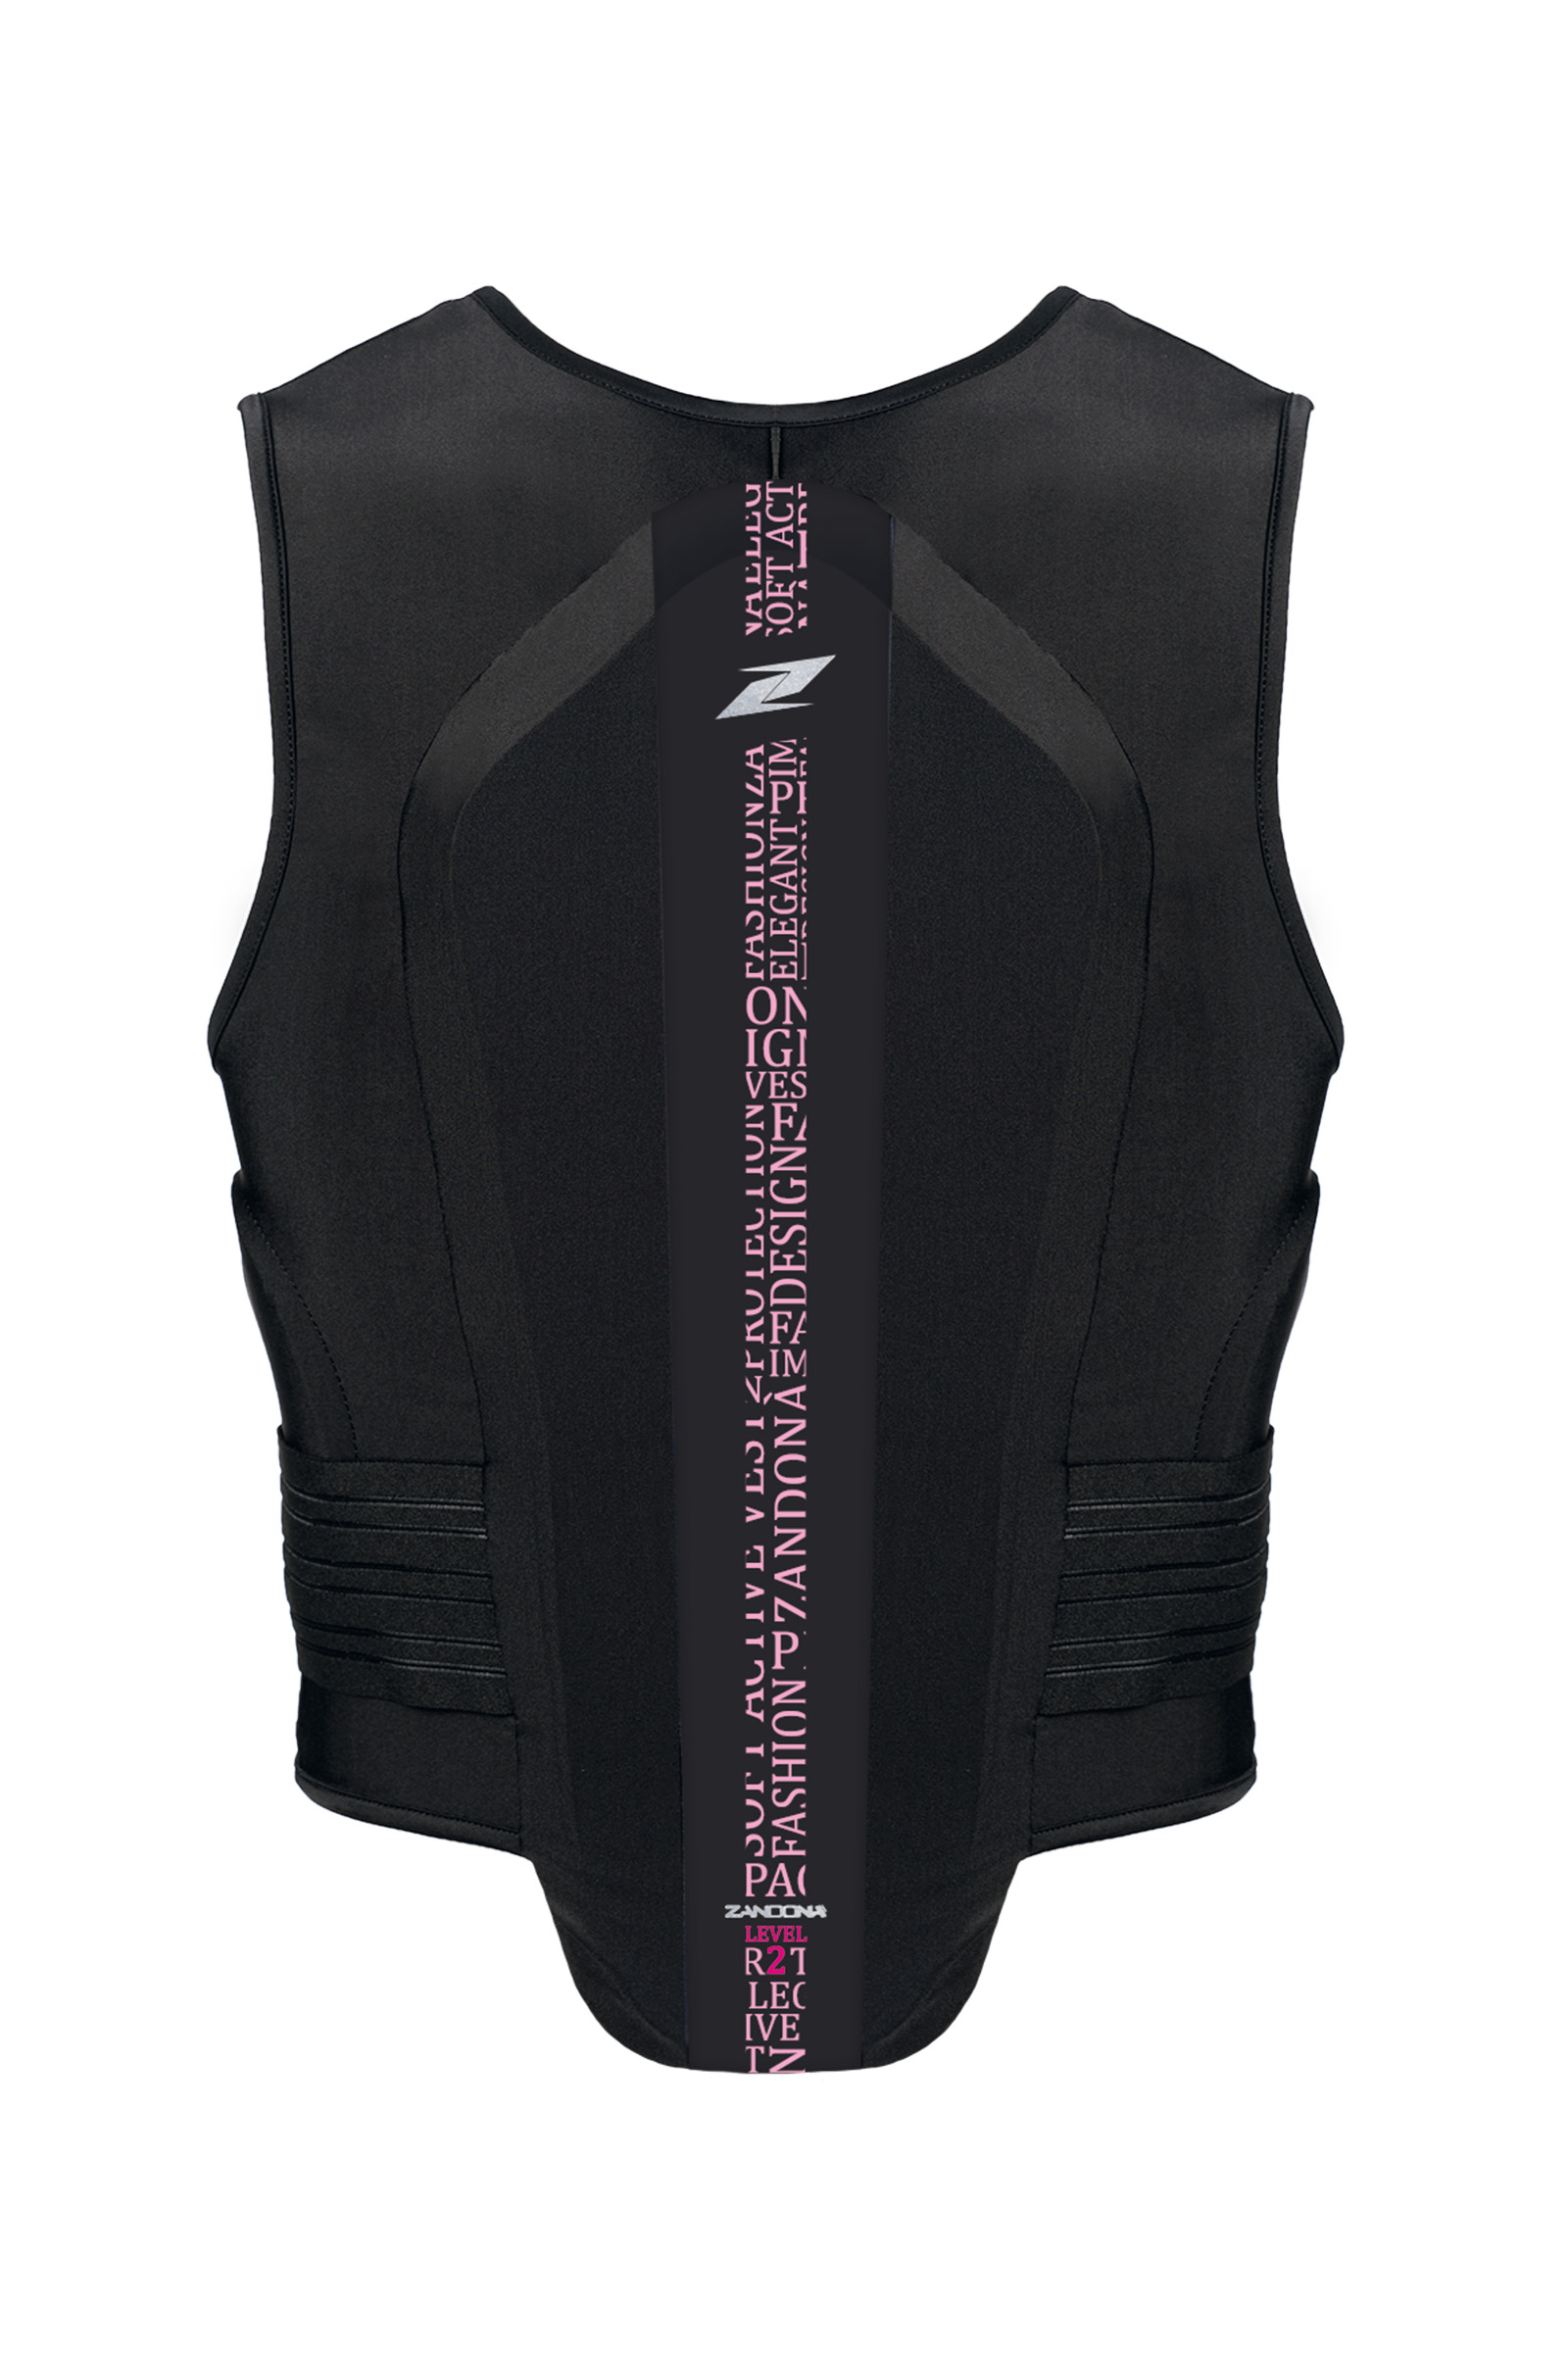 Buy Zandona Soft Vest Pro x6 (158-167cm) Back Protector